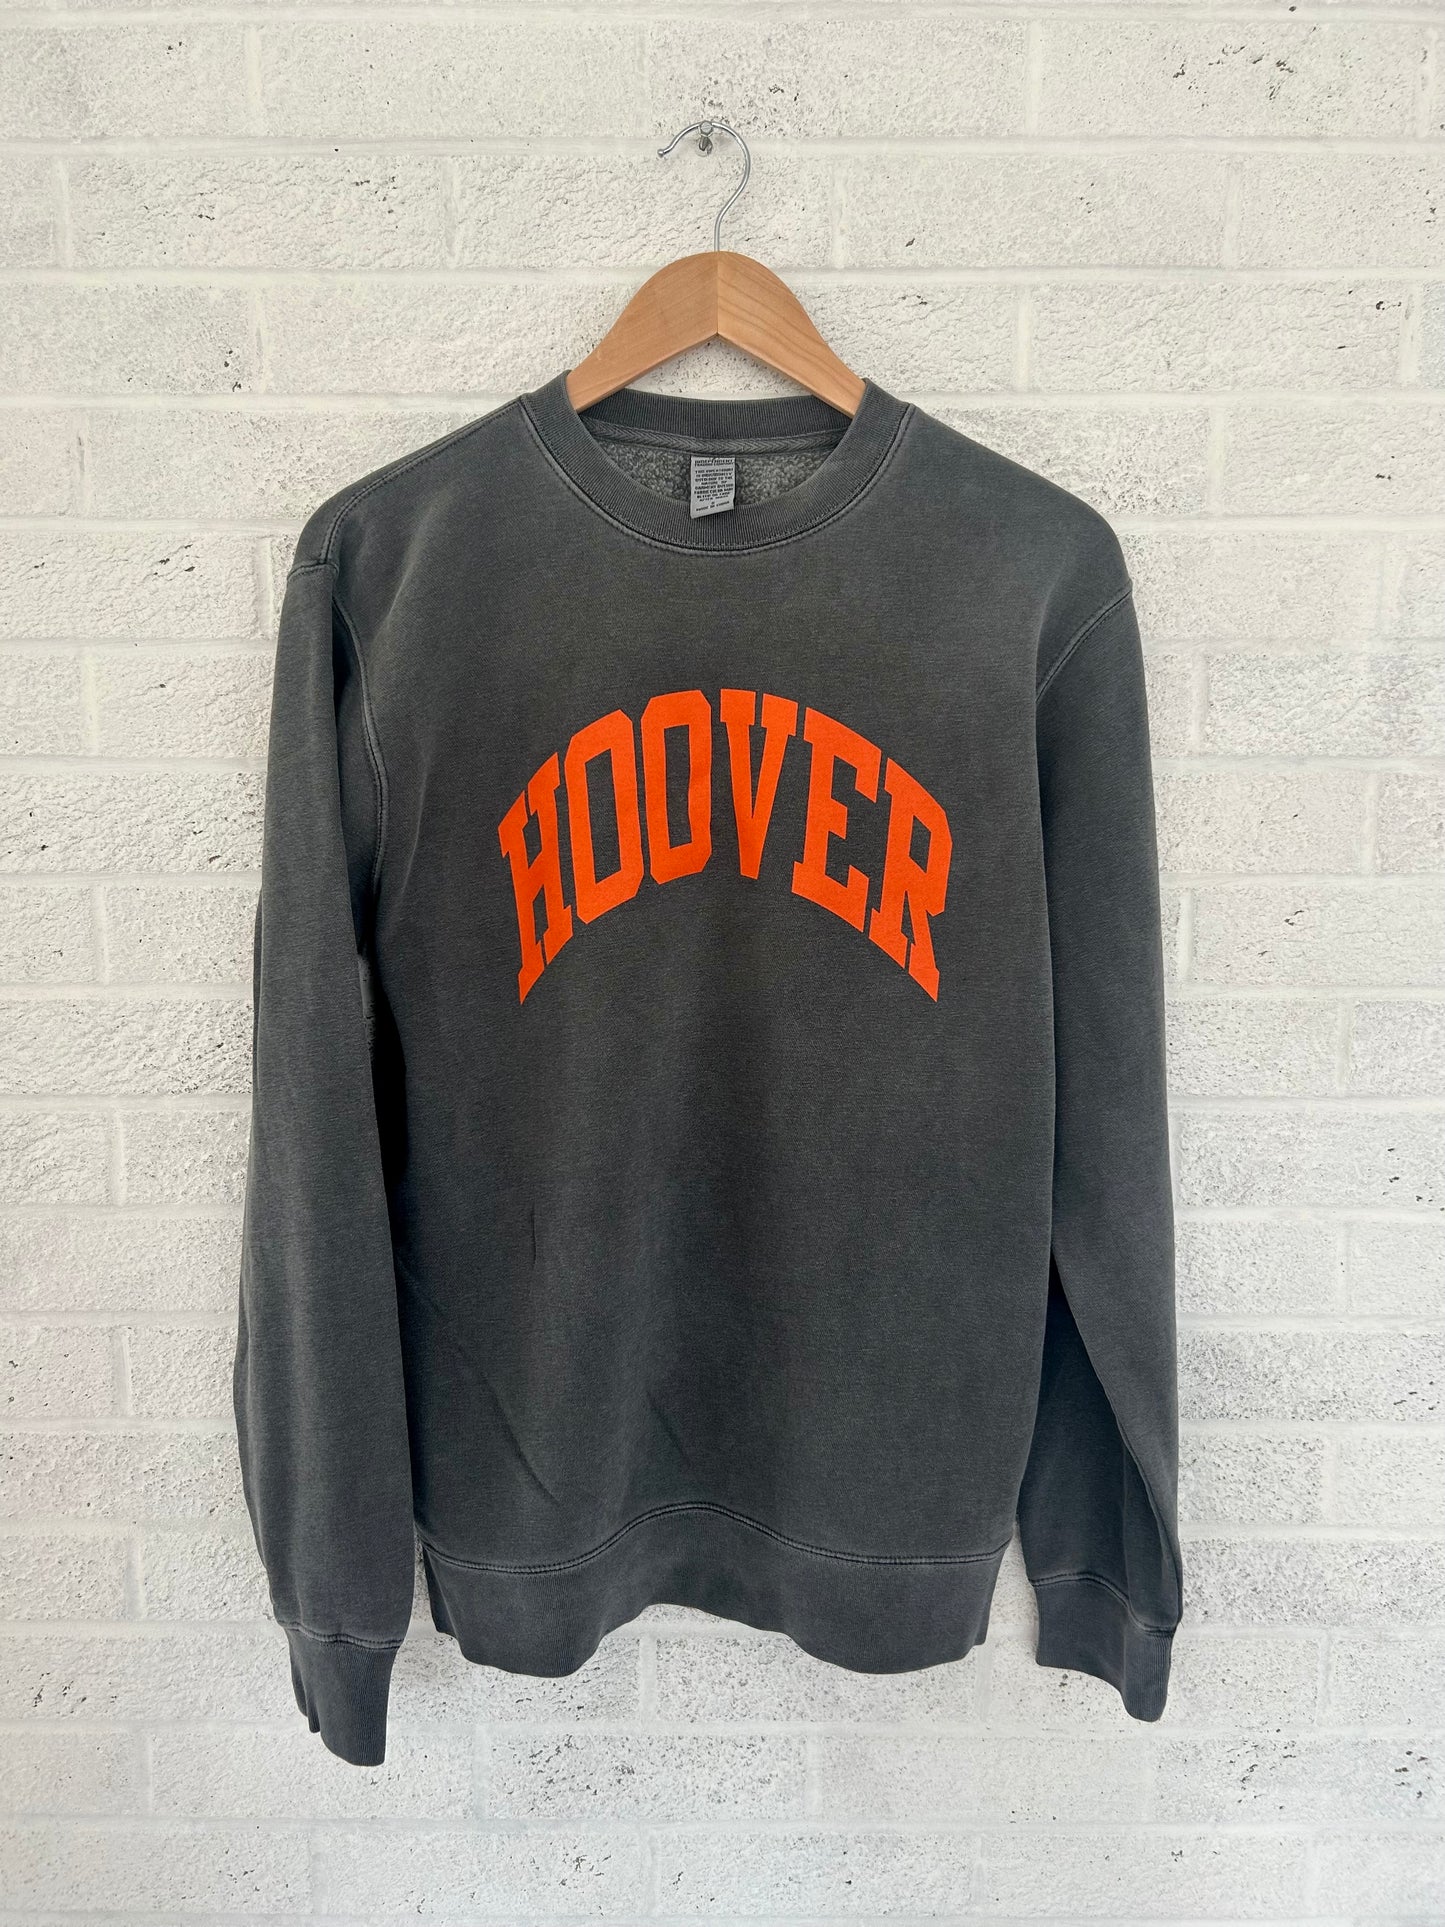 Hoover Arch Vintage Adult Sweatshirt